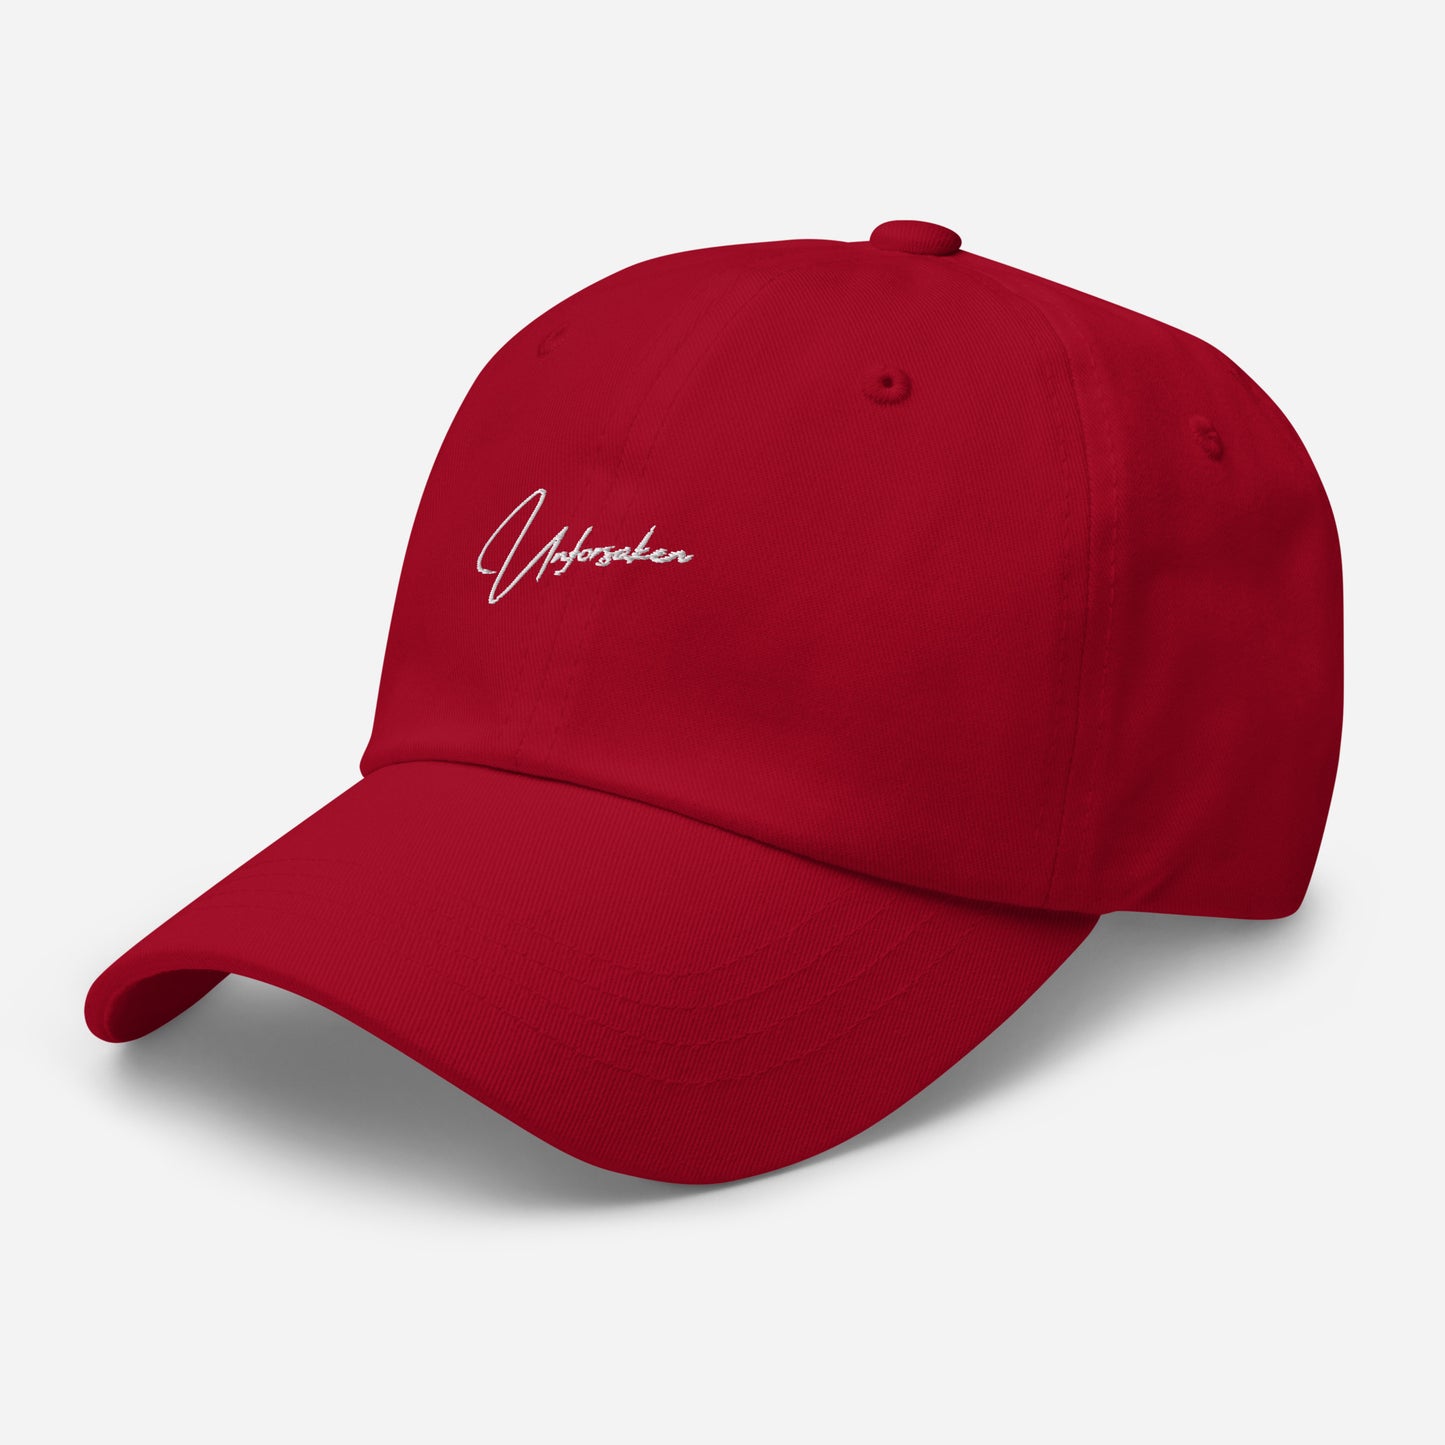 UNFORSAKEN 007 Cursive Embroidered Training Hat